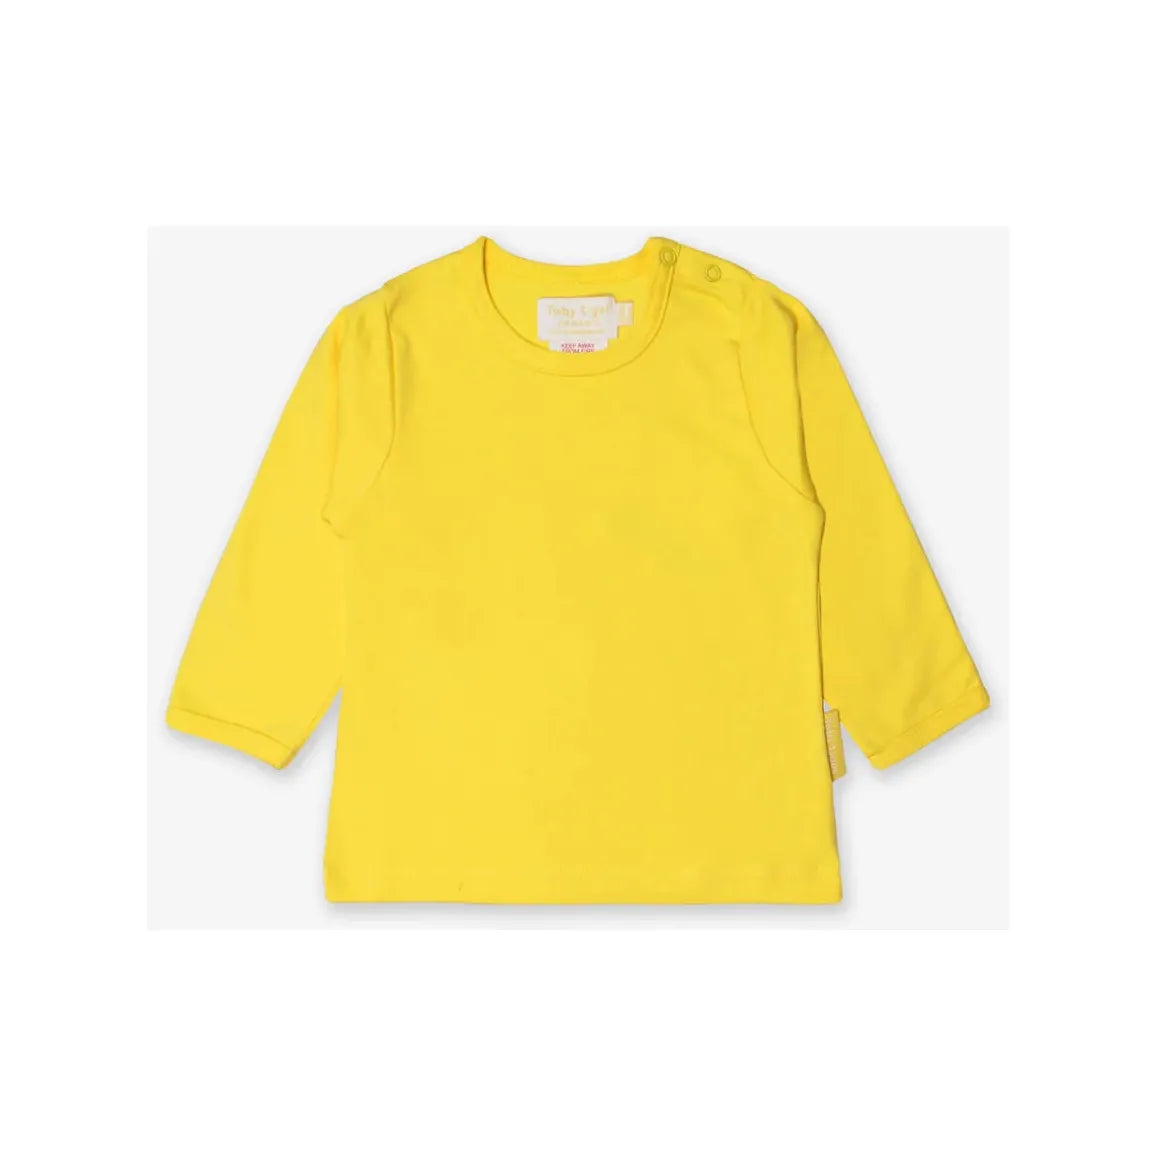 Toby Tiger Basic Long Sleeve Yellow T-Shirt